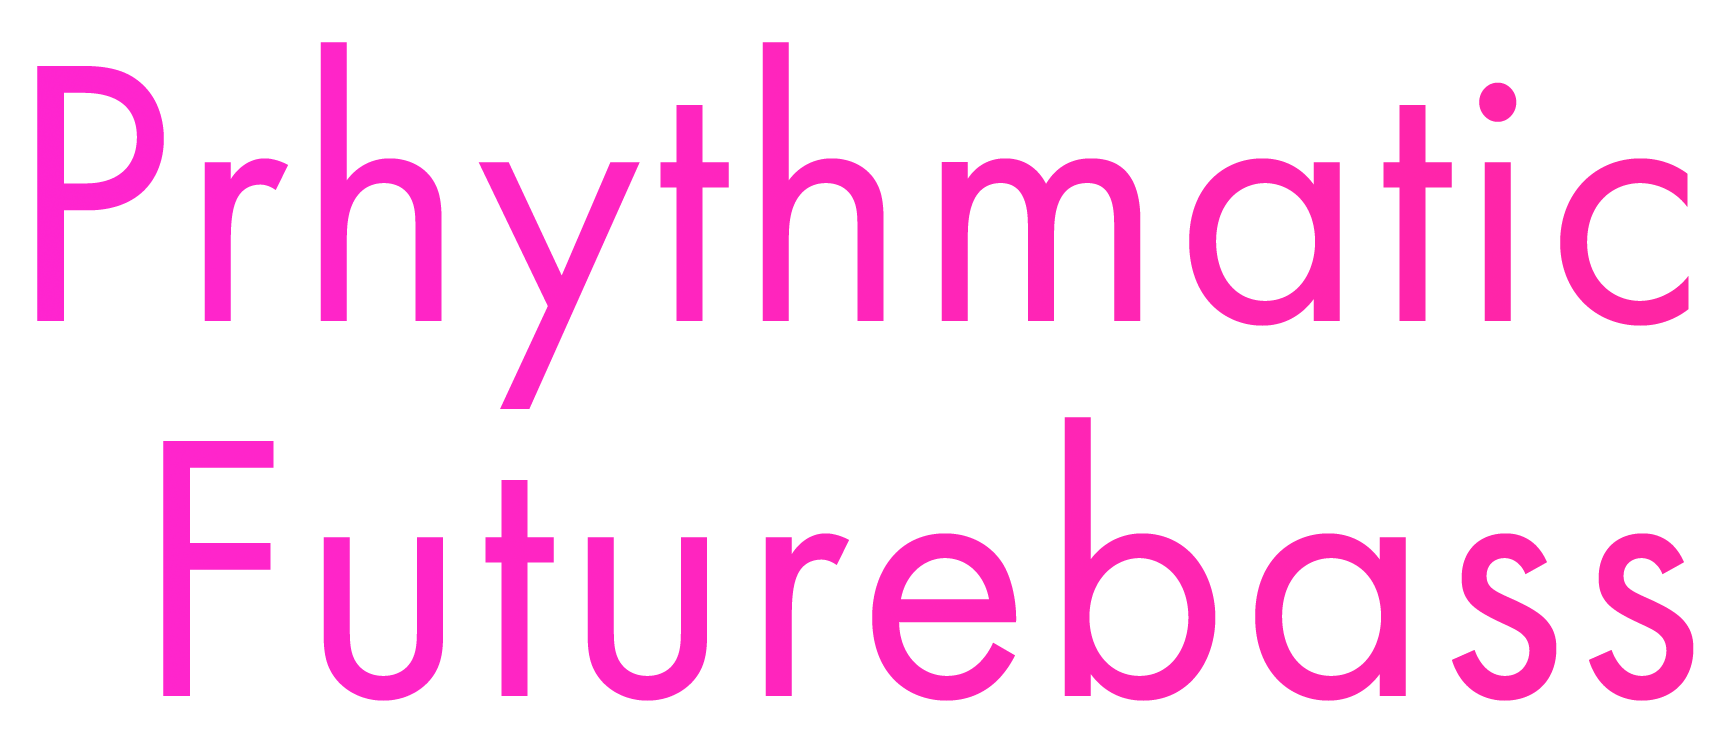 Prhythmatic Futurebass